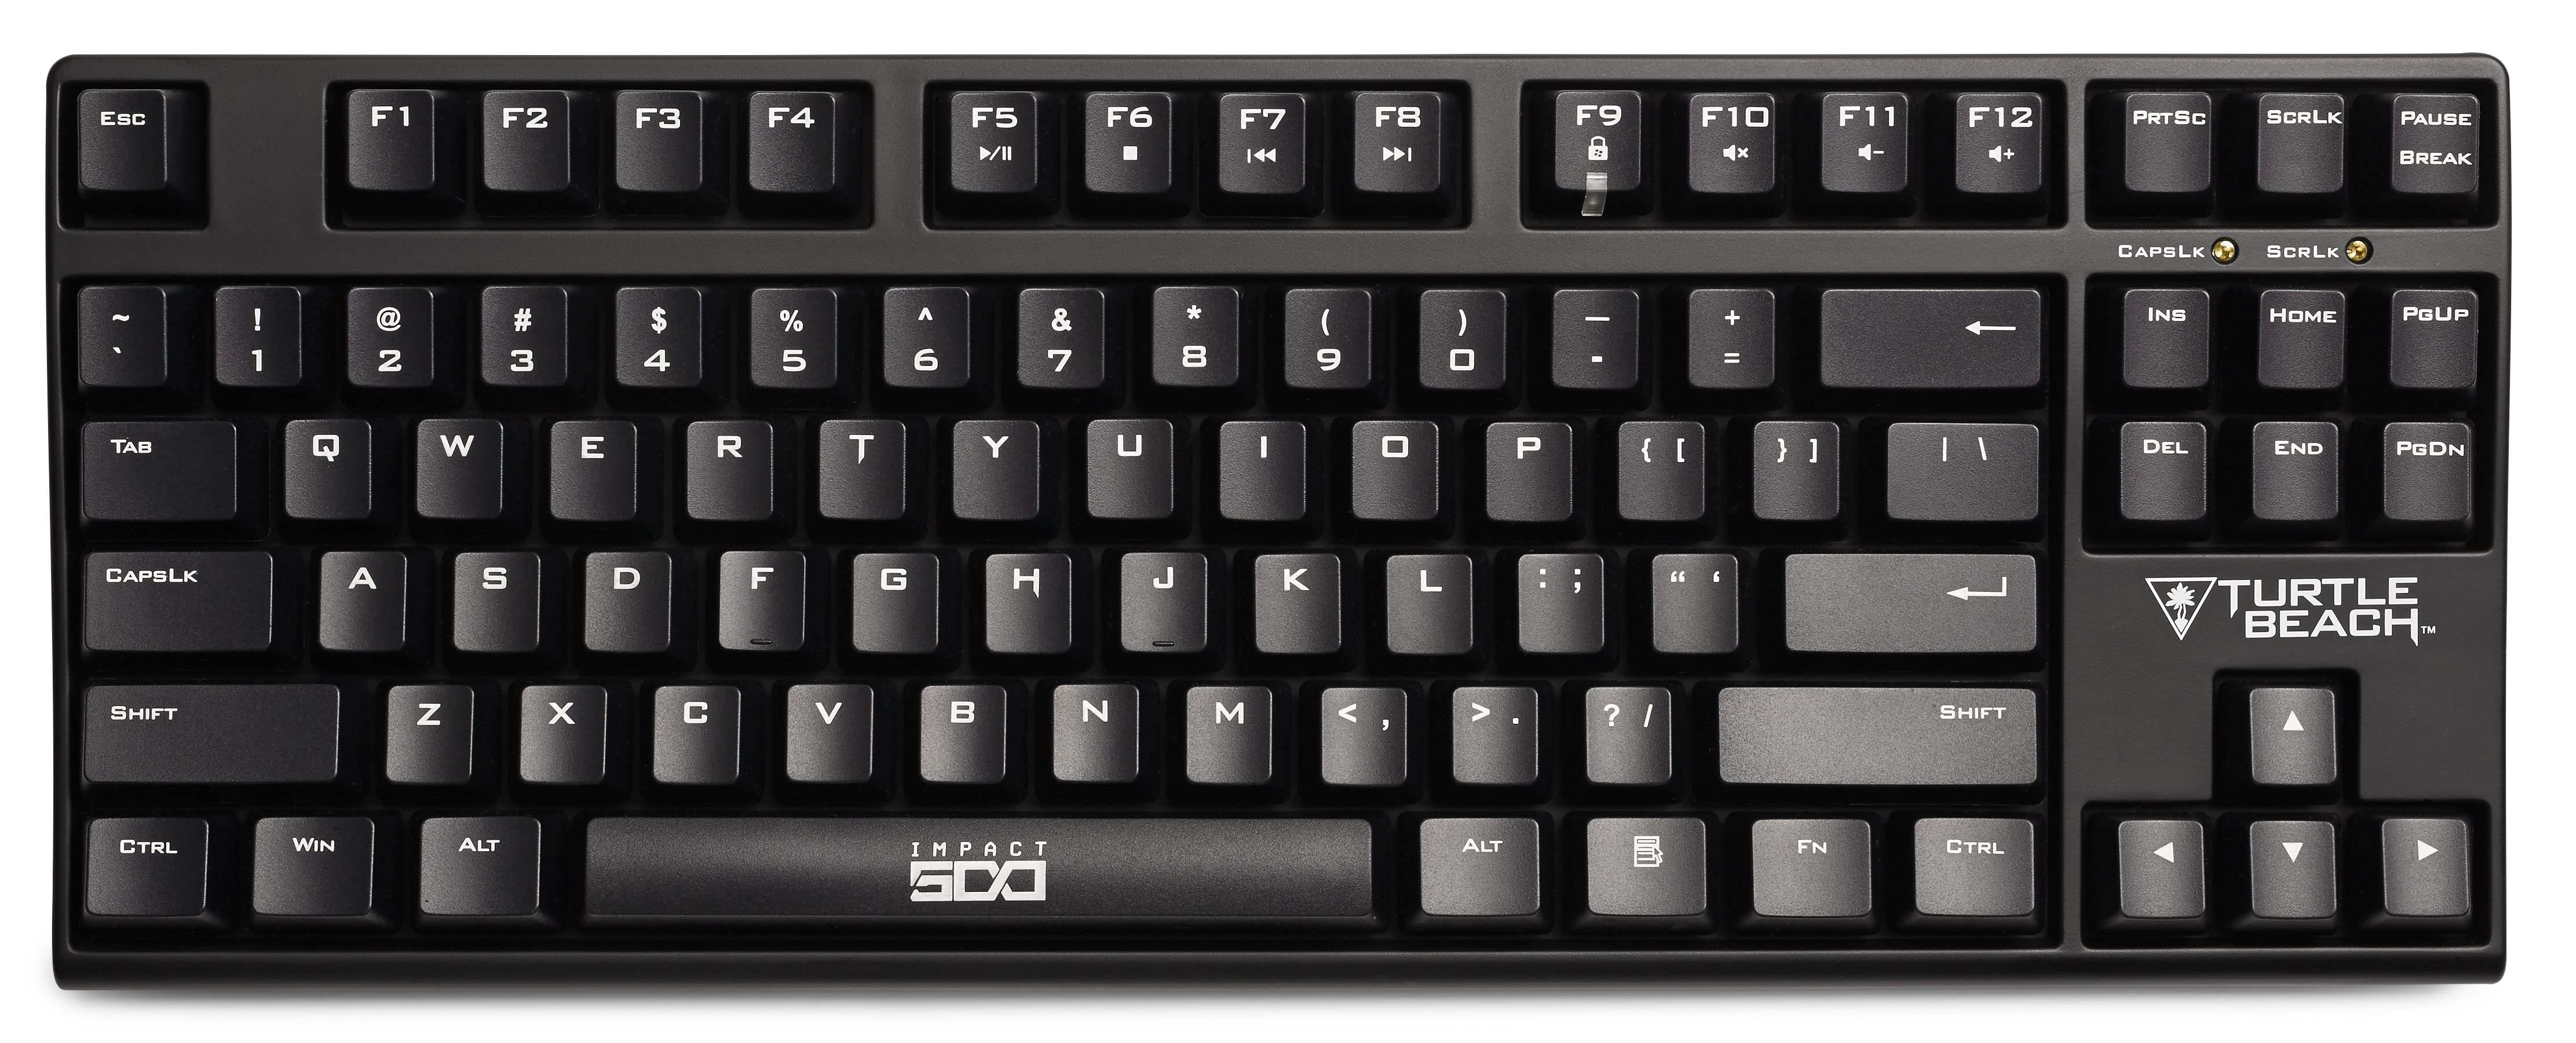 Georgian keyboard layout for mac